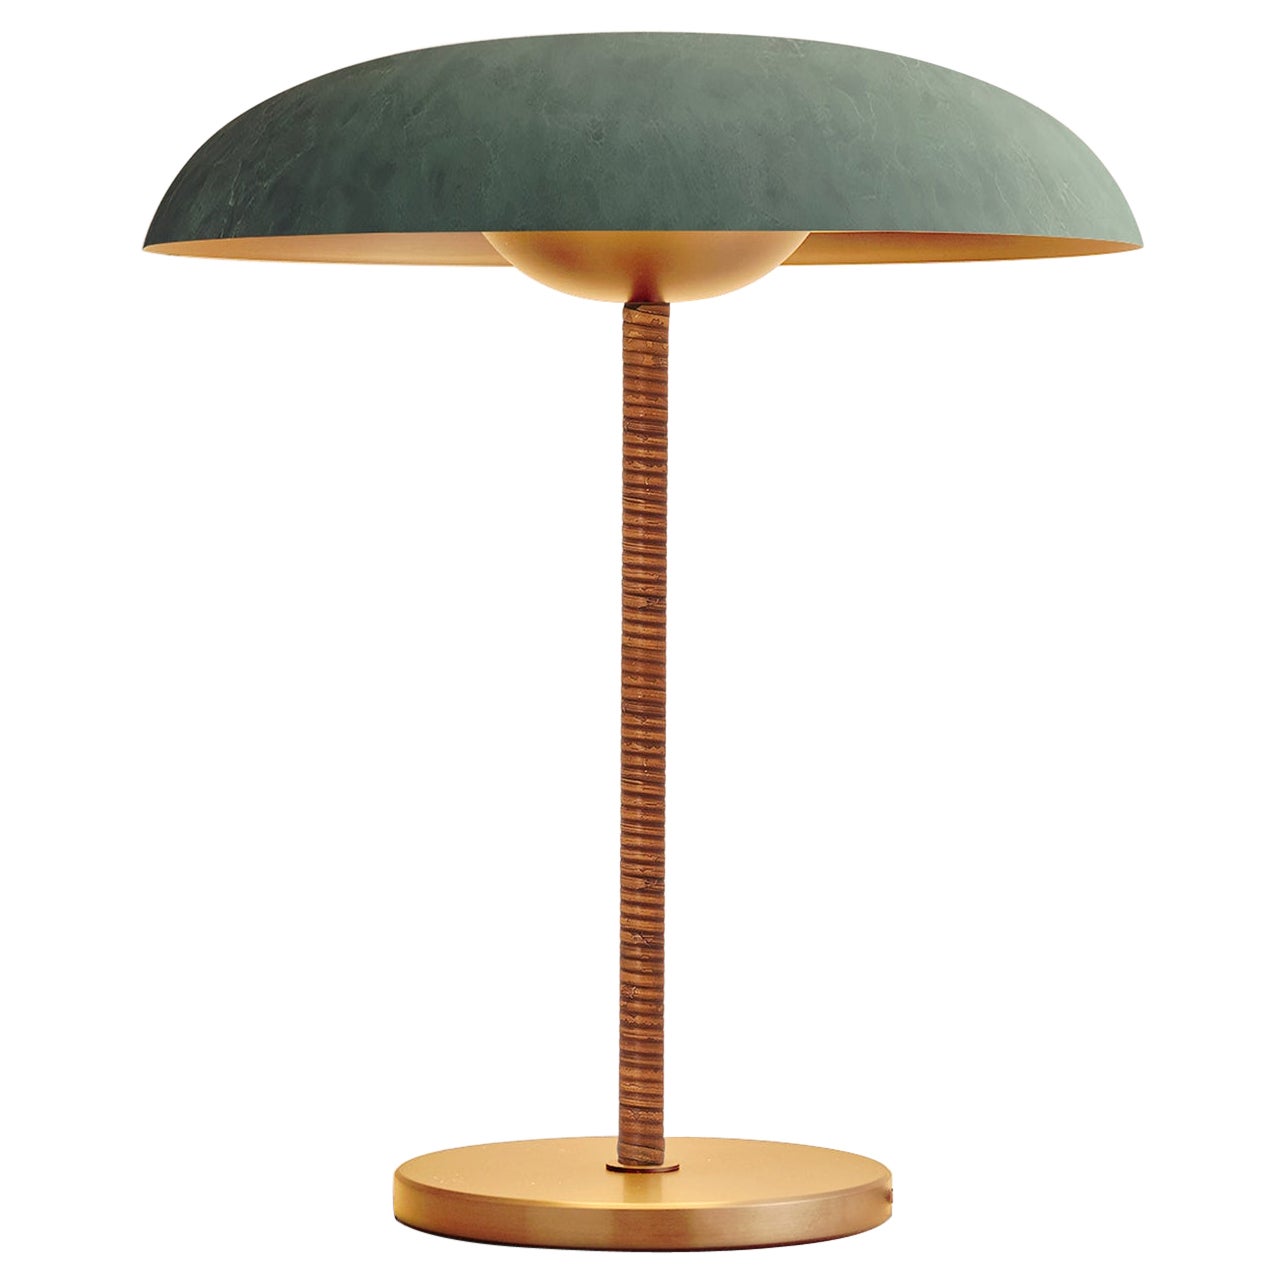 'Cosmic Solstice Verdigris' Table Lamp, Handmade Verdigris Patinated Brass Light For Sale